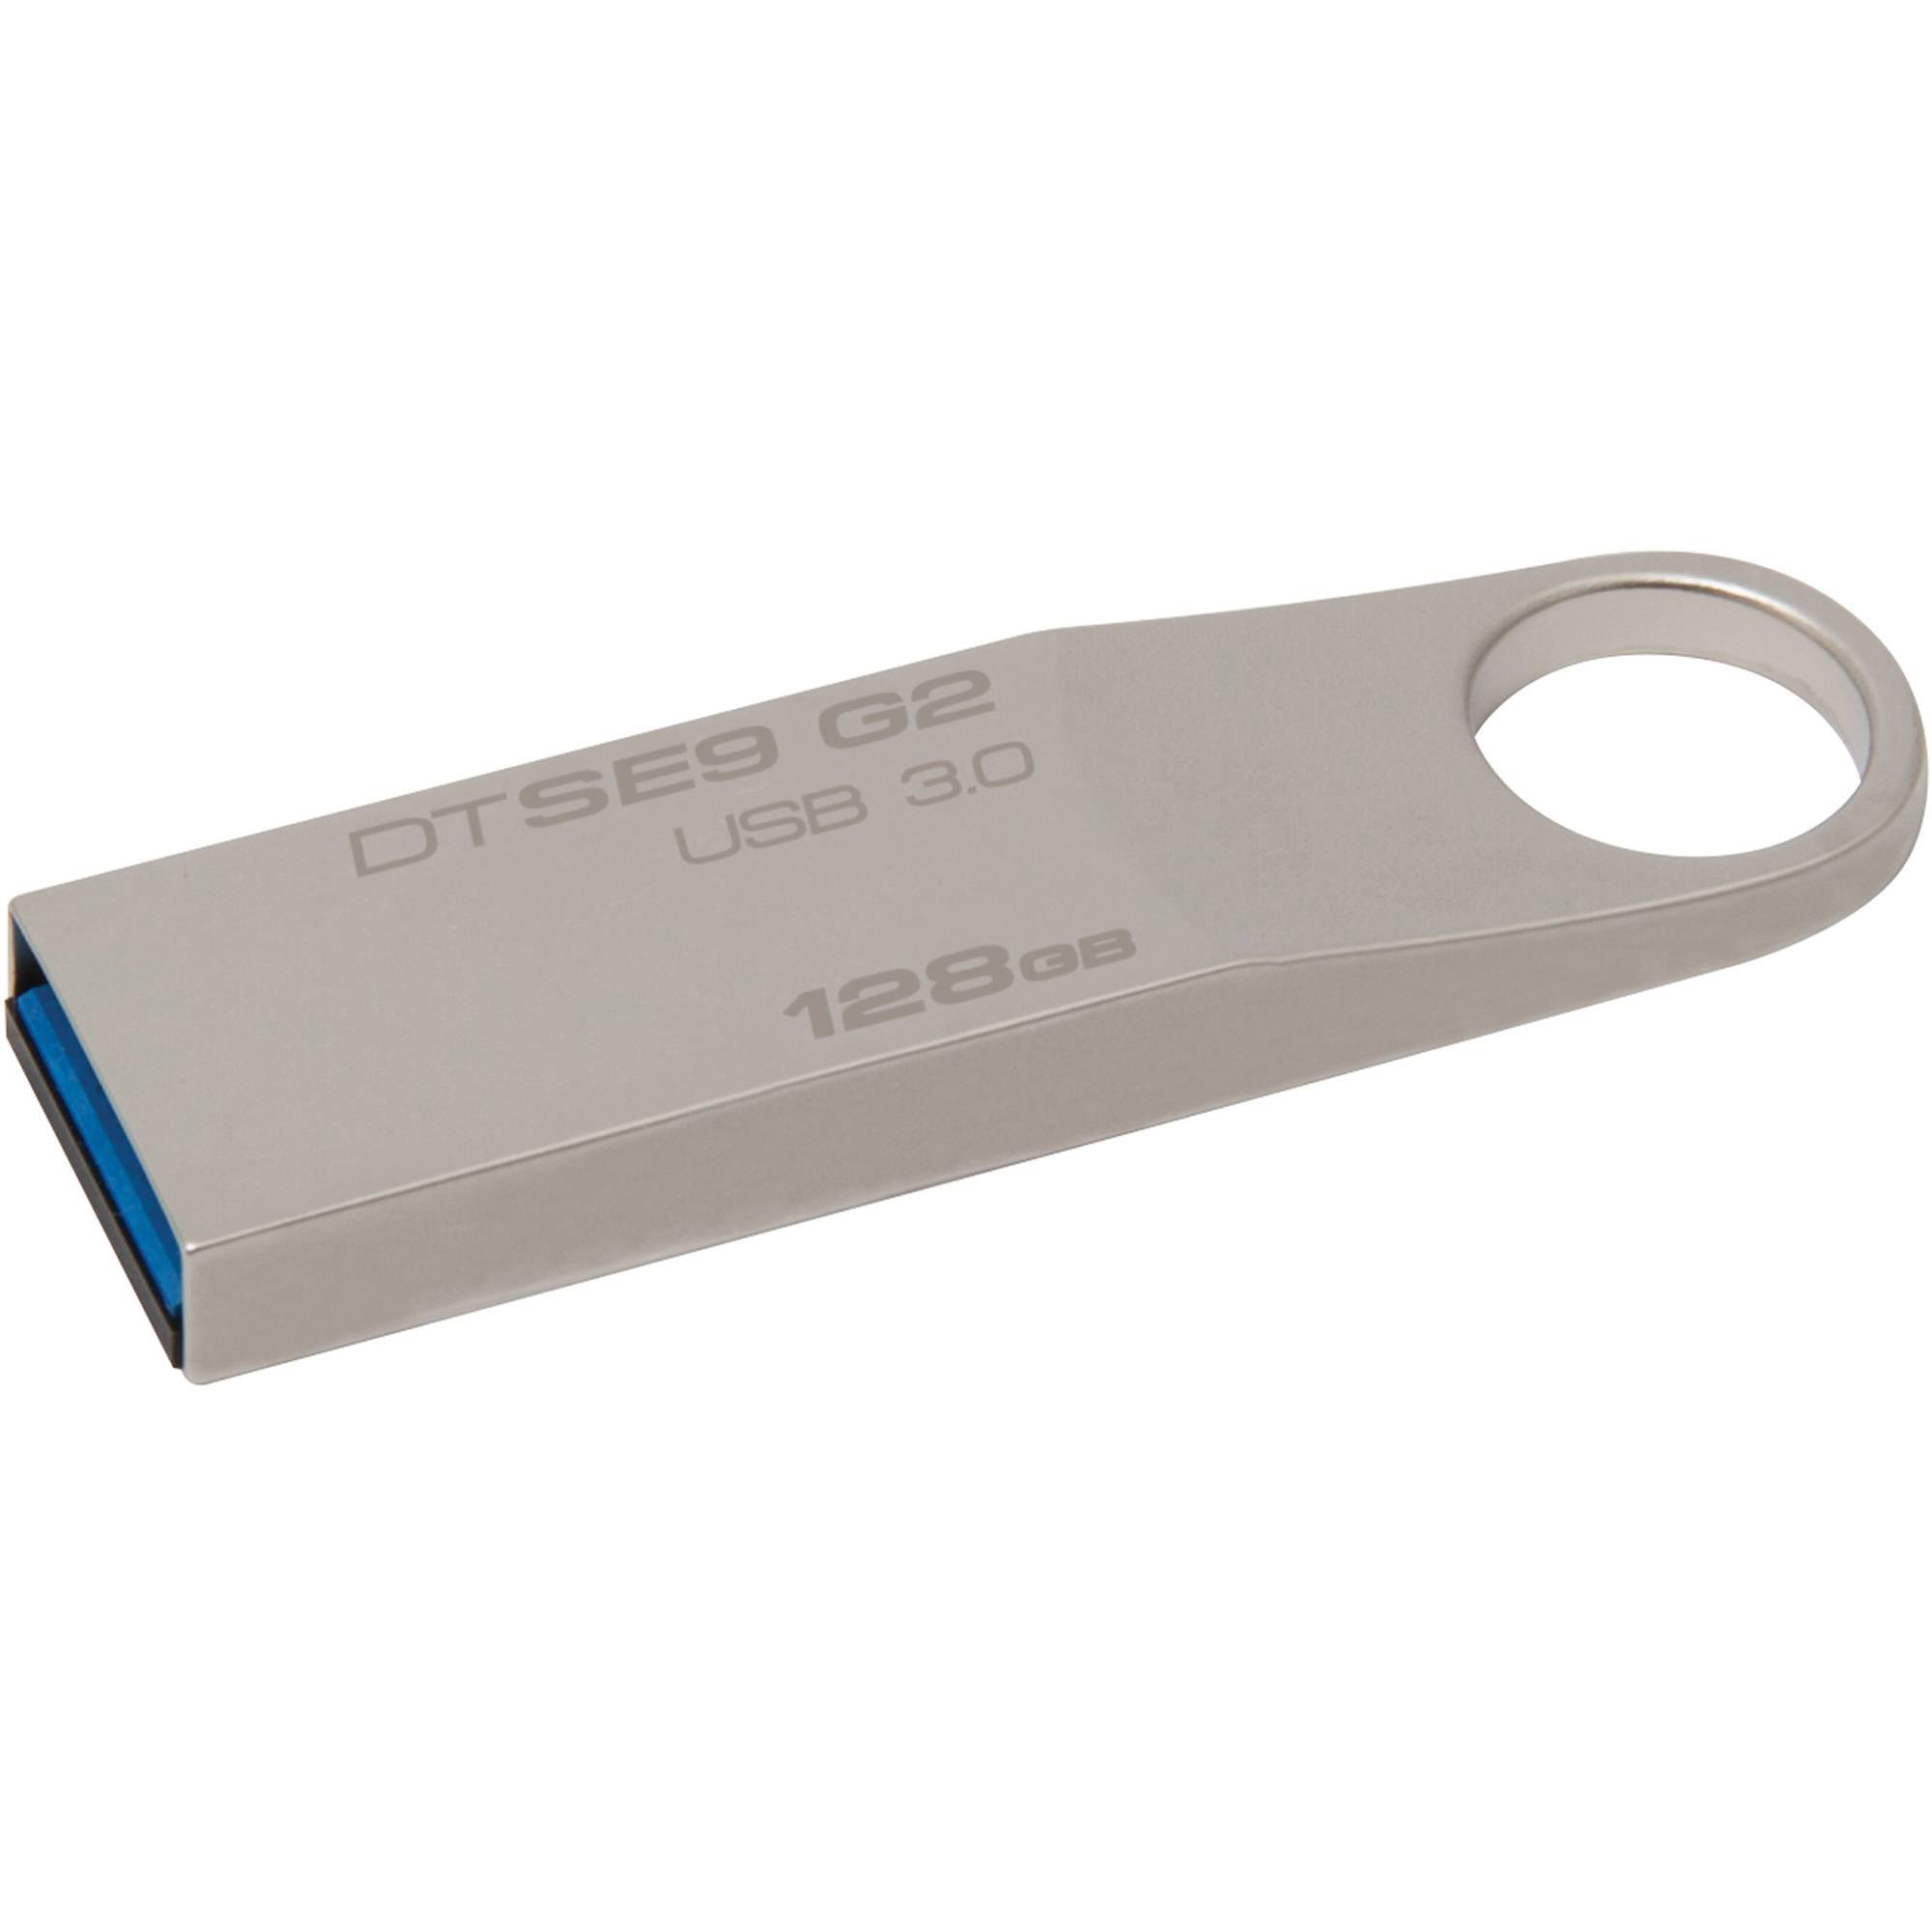 Original Kingston Data Traveler SE9 G2 128GB Silver USB 3.0 Flash Drive (DTSE9G2/128GB)